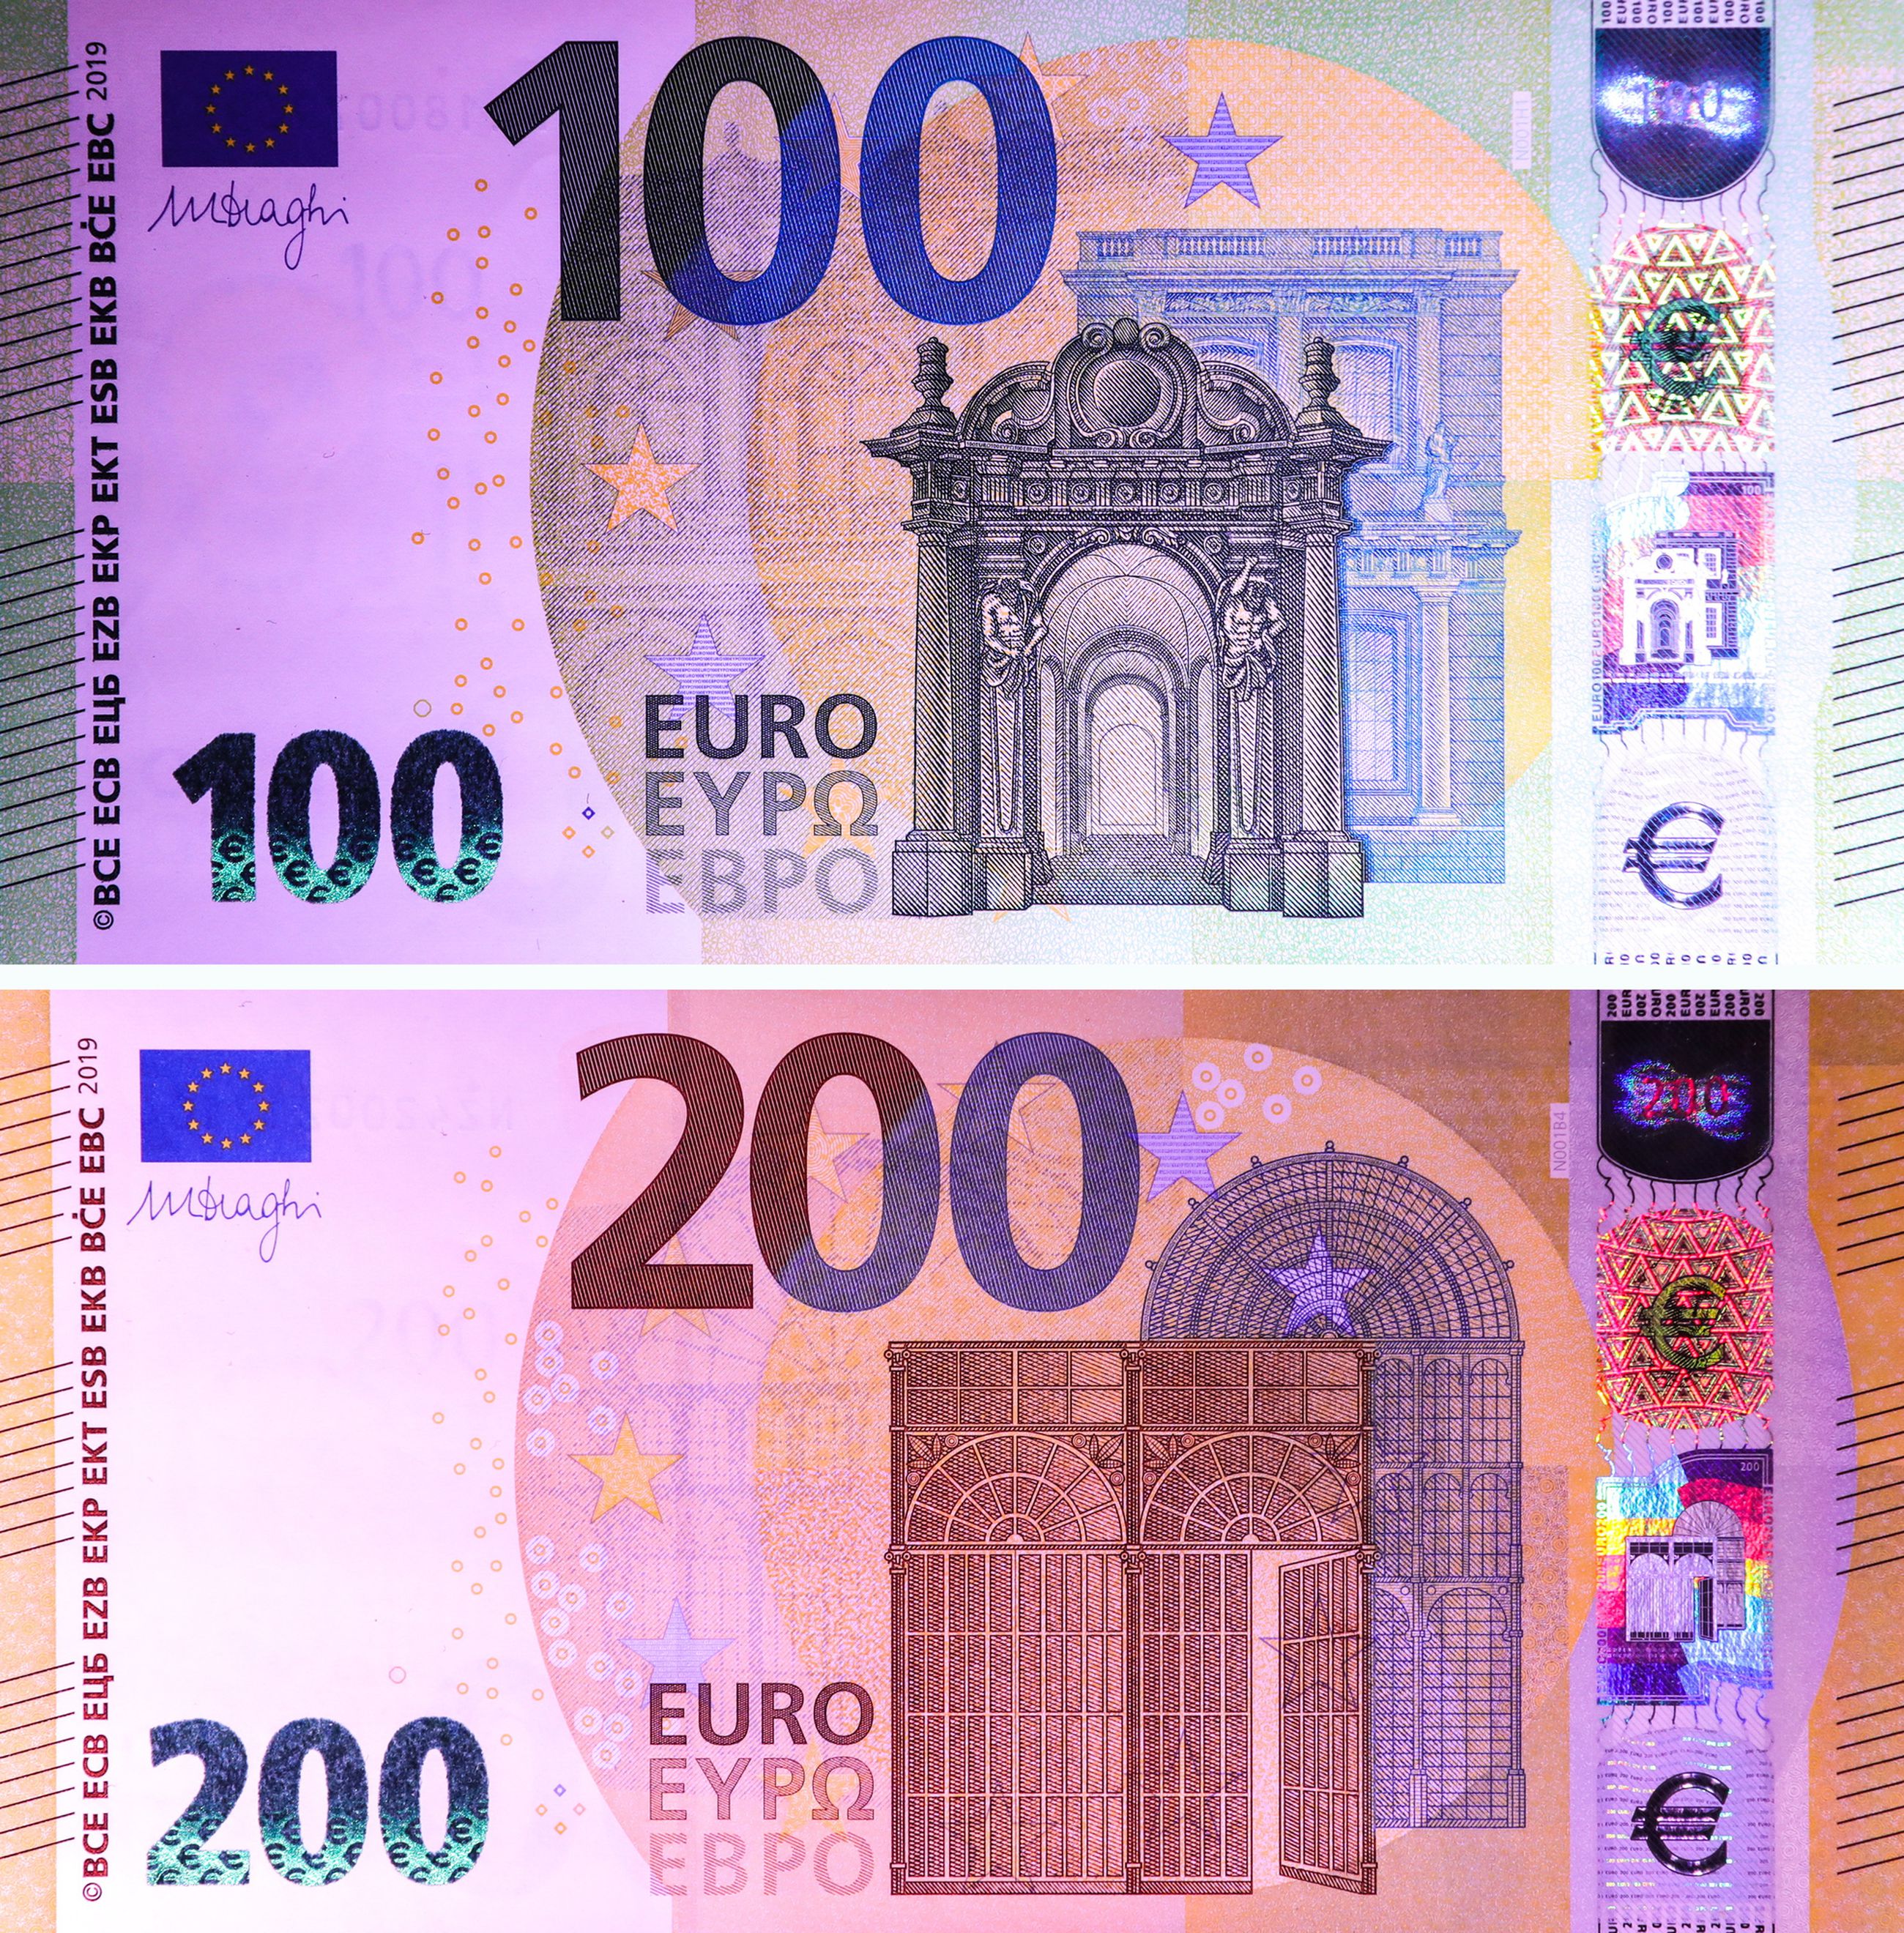 Номинал валюты. Евро банкноты номинал 200. 100 Евро купюра. Как выглядит 100 евро купюра. Новый евро банкноты 100 и 200.